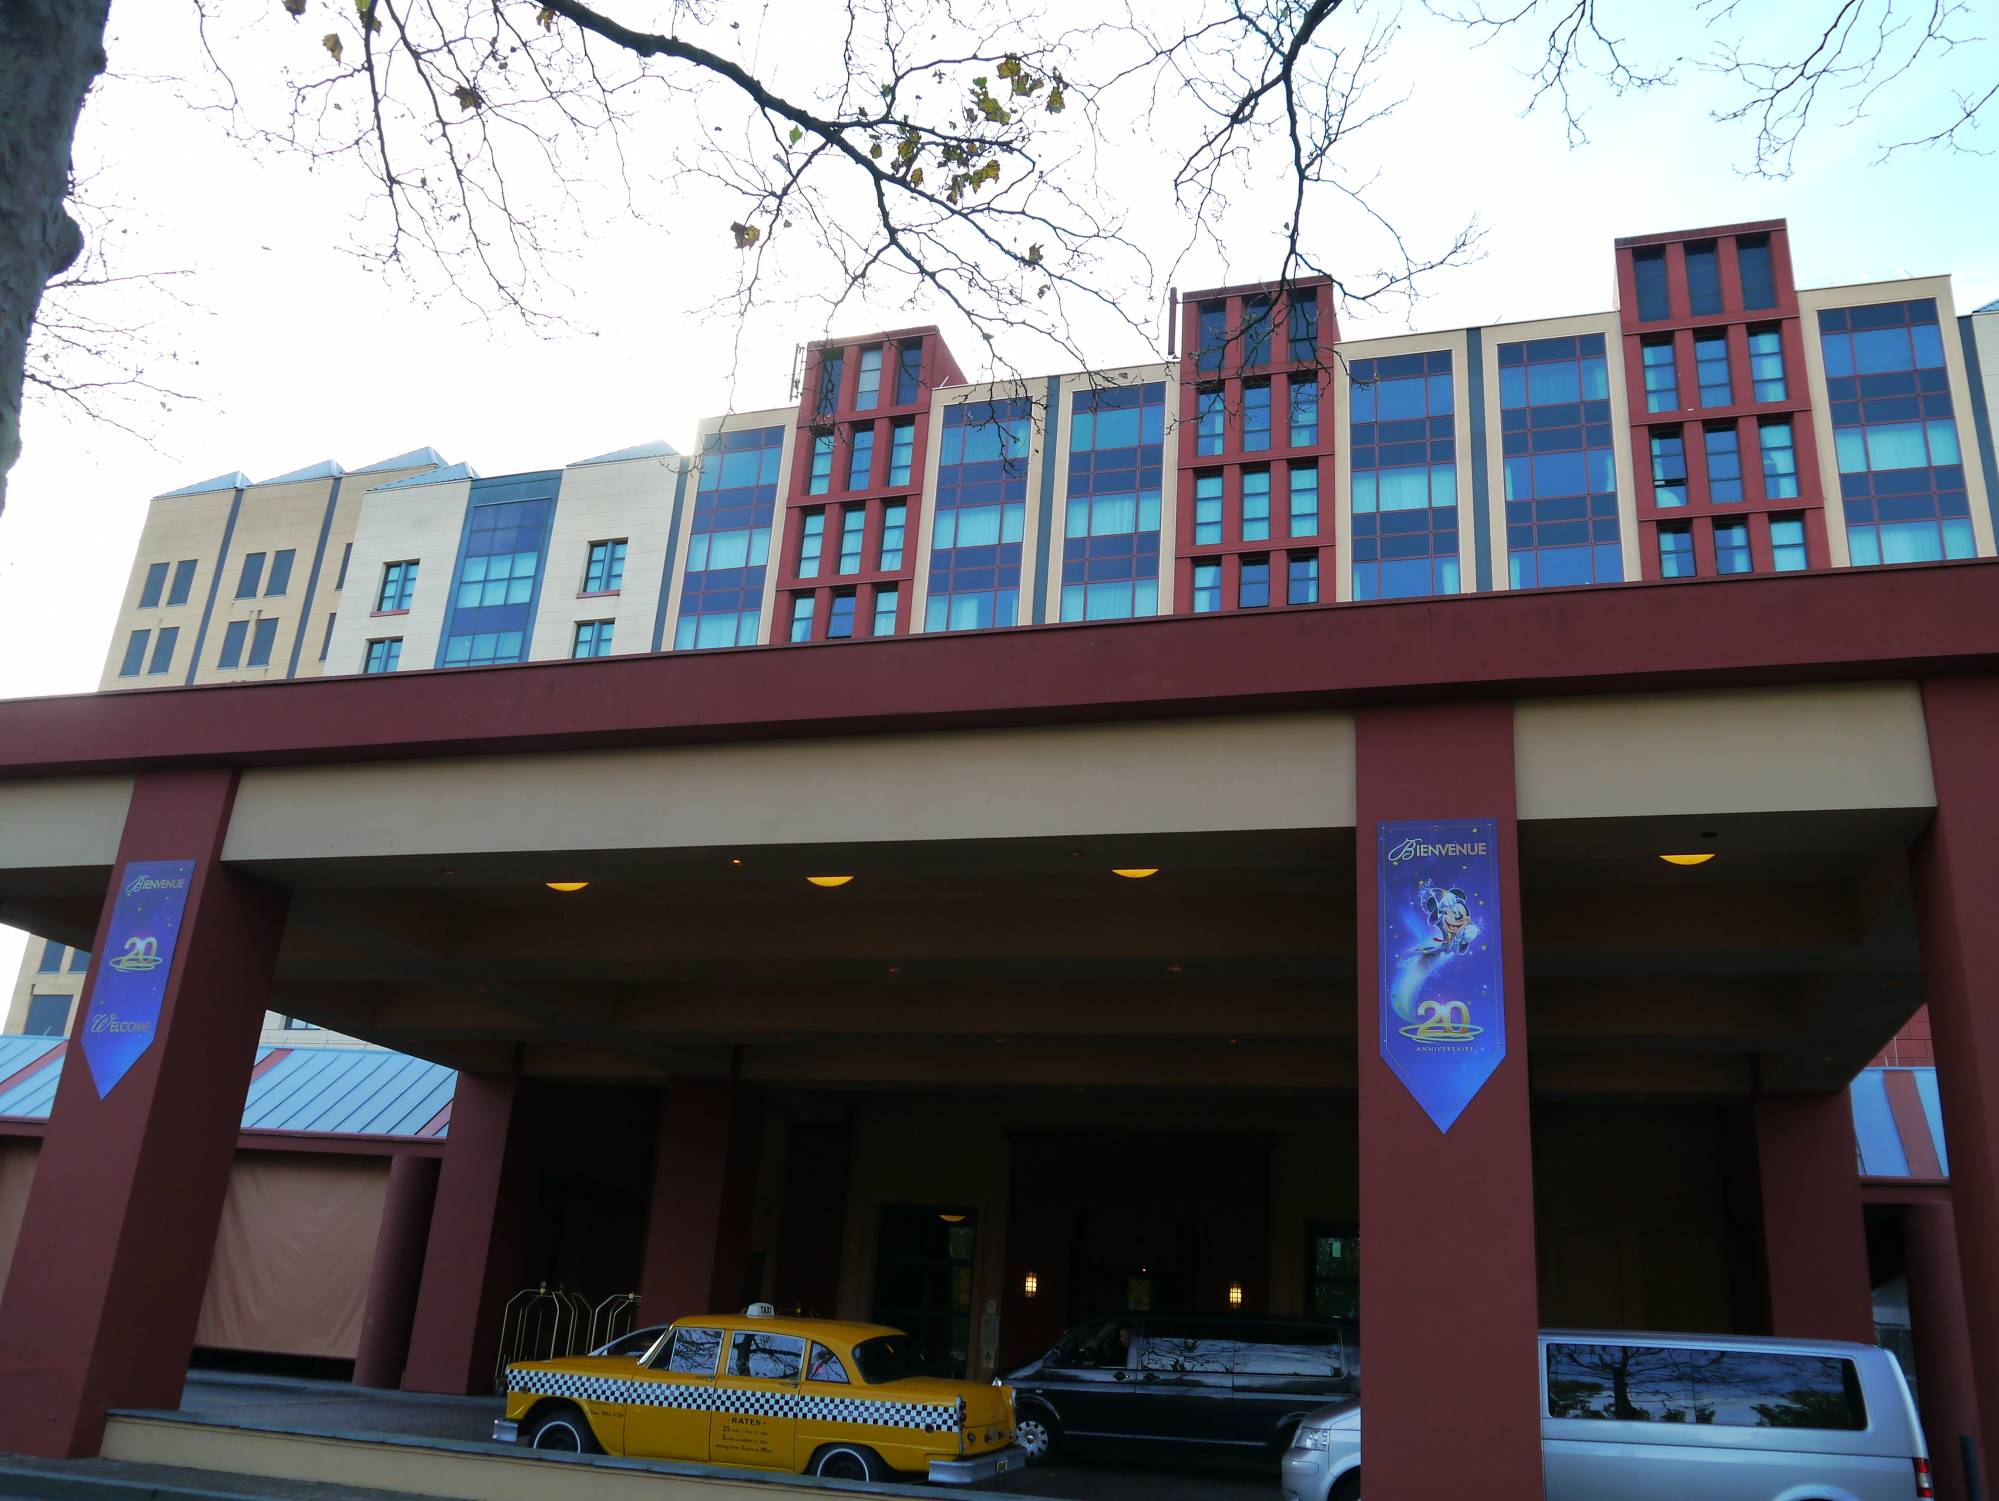 Hotel New York - entrance